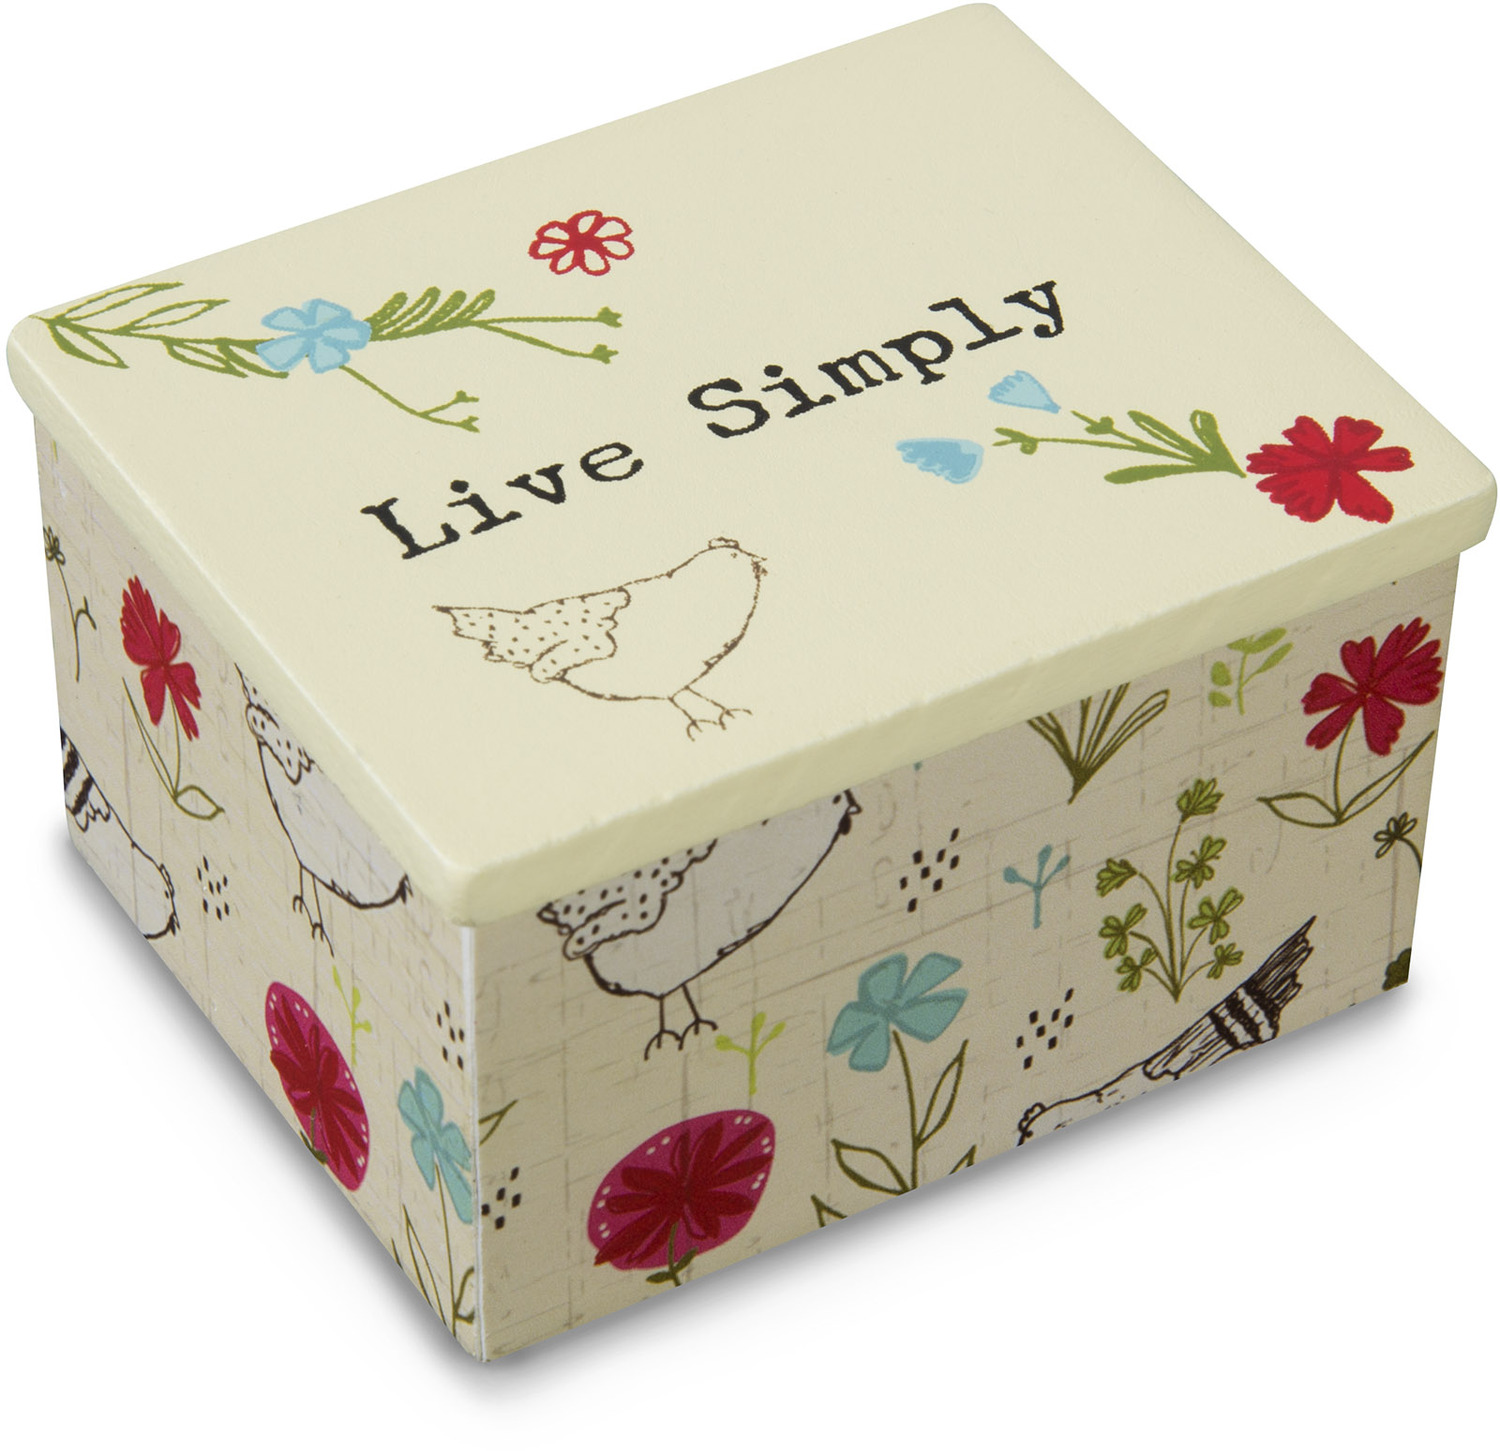 Live Simply by Live Simply by Amylee - Live Simply - 2" x 2.25" MDF Keepsake Box